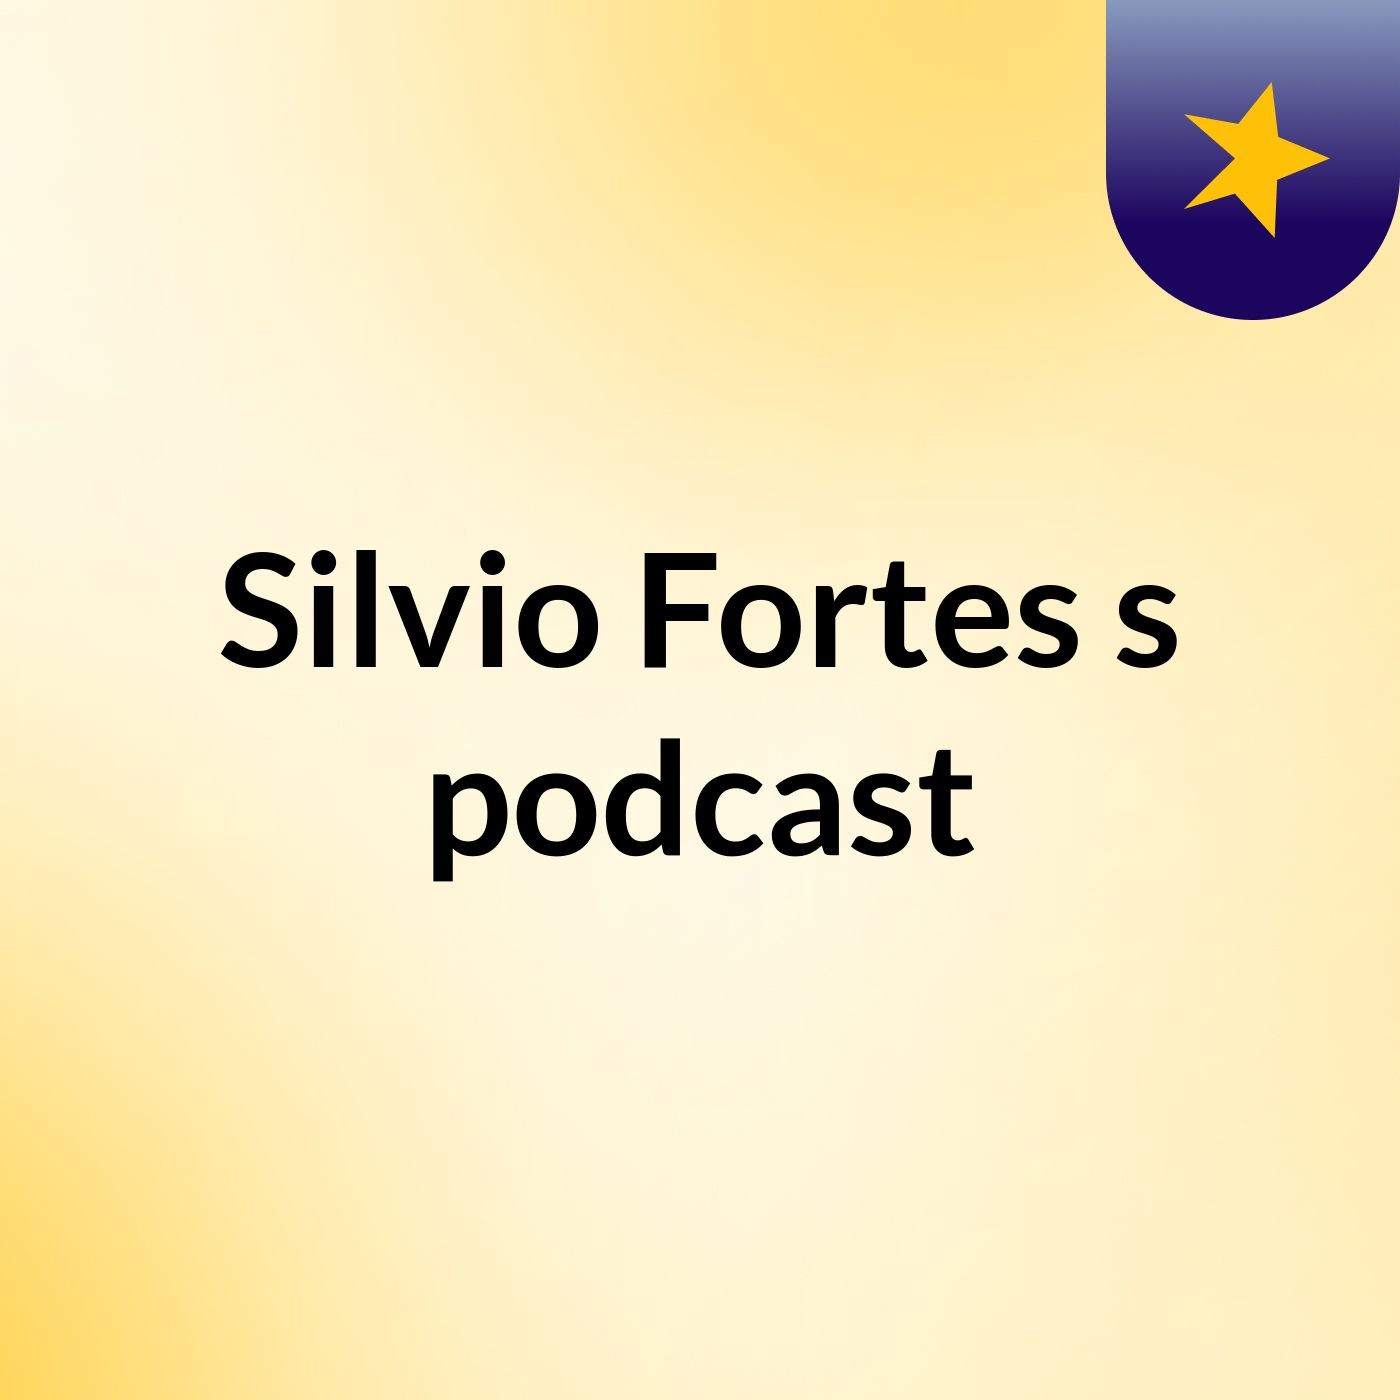 Silvio Fortes's podcast